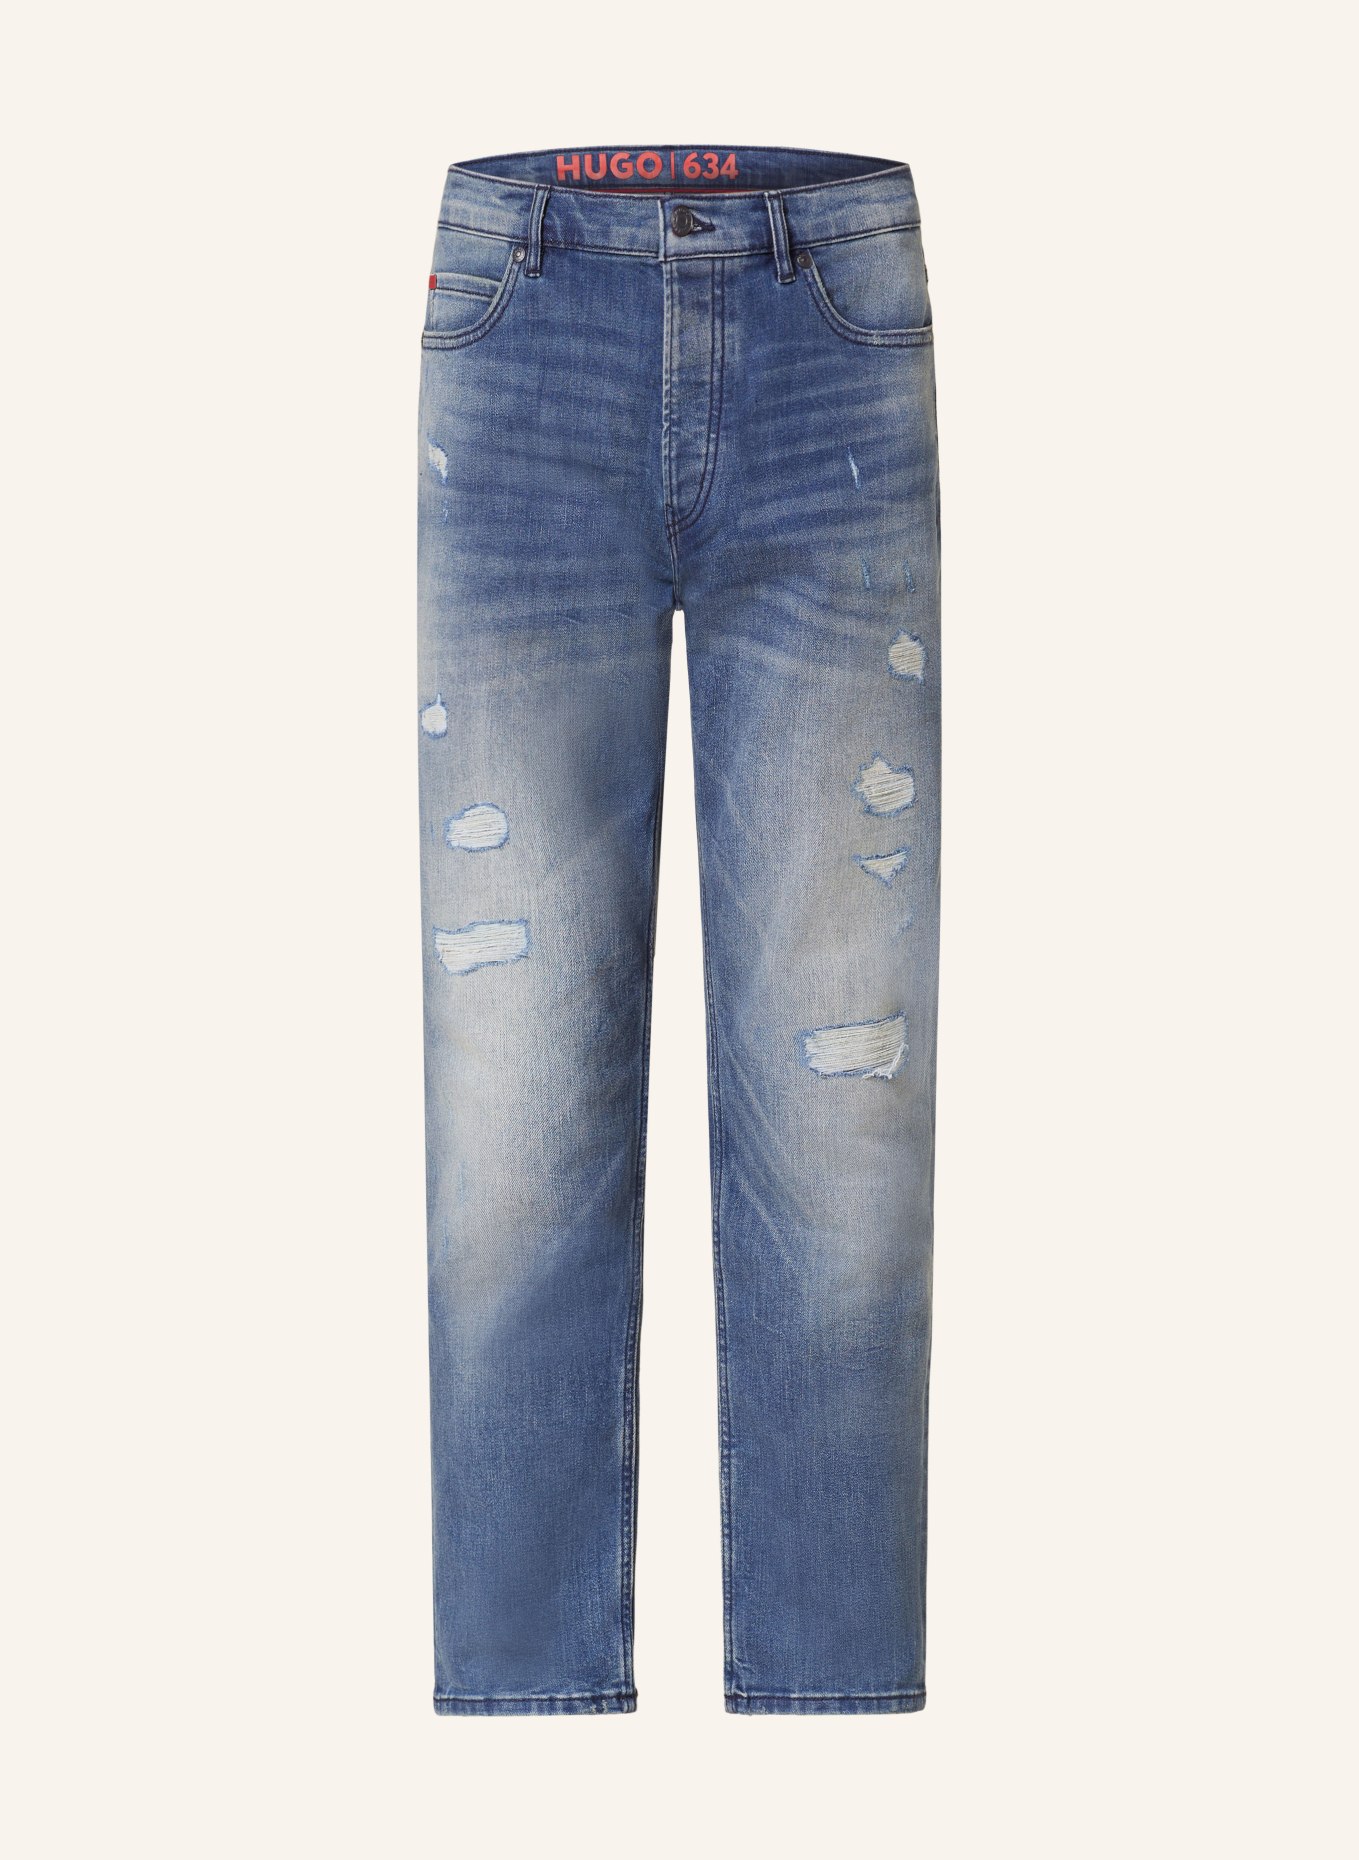 HUGO Jeans HUGO 634 Tapered Fit, Farbe: 432 BRIGHT BLUE (Bild 1)